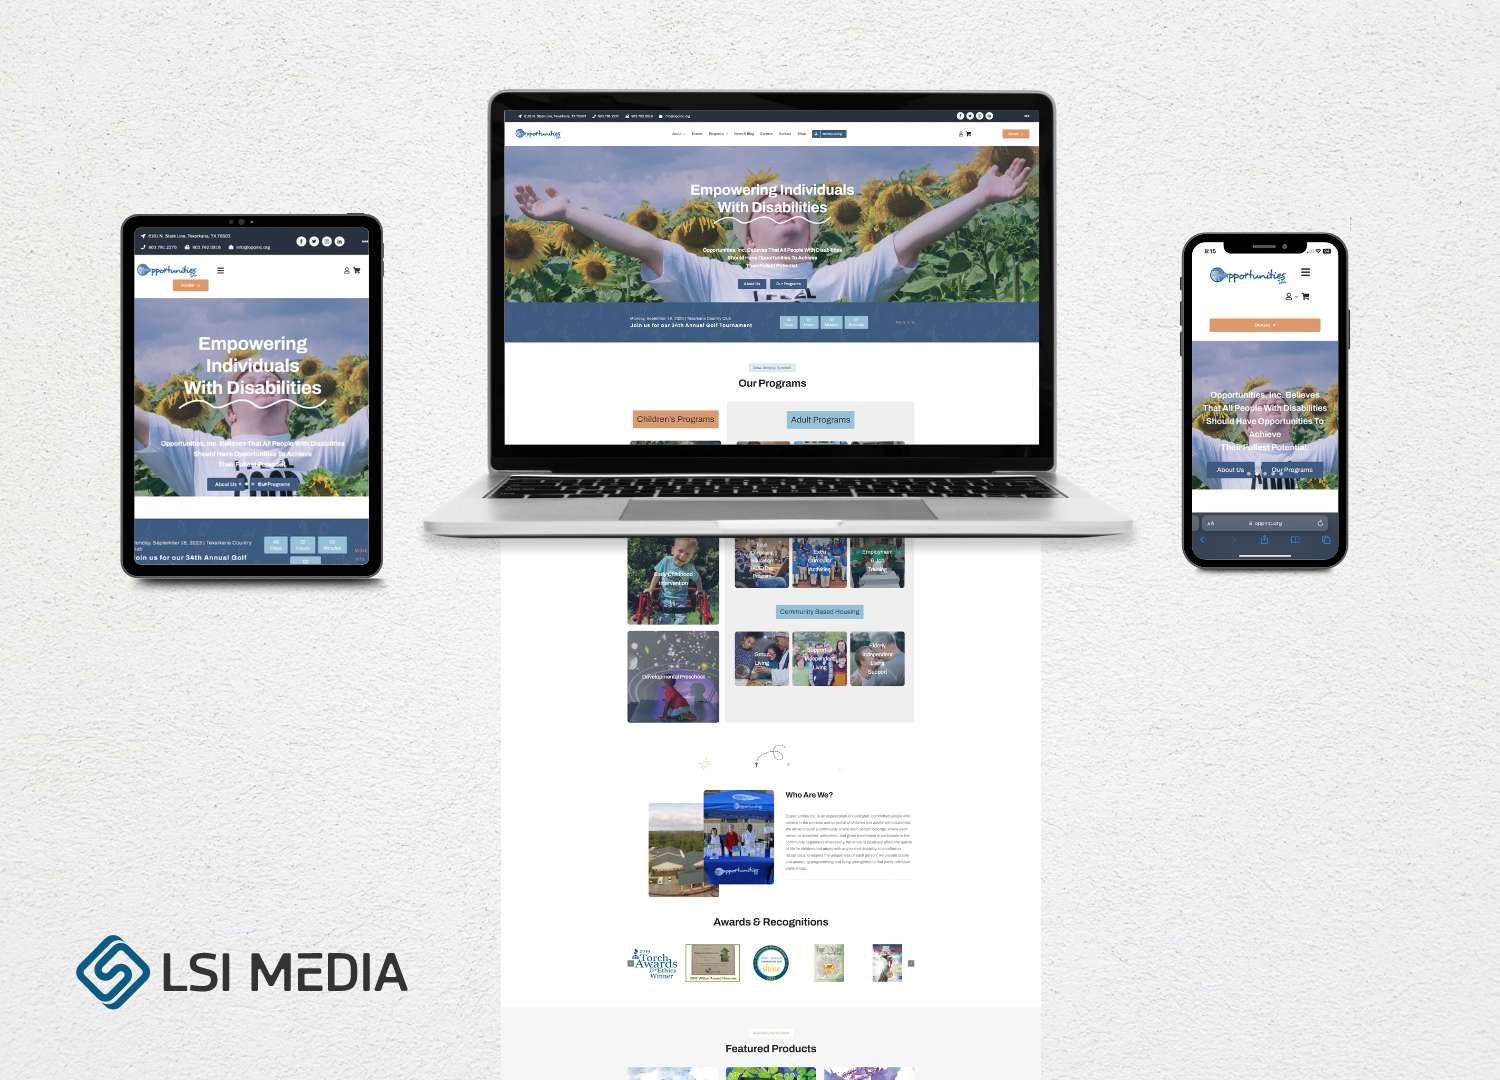 OppInc WEBSITE 3 Opportunities Inc: New Website, Social Media Marketing & Graphic Design EDG